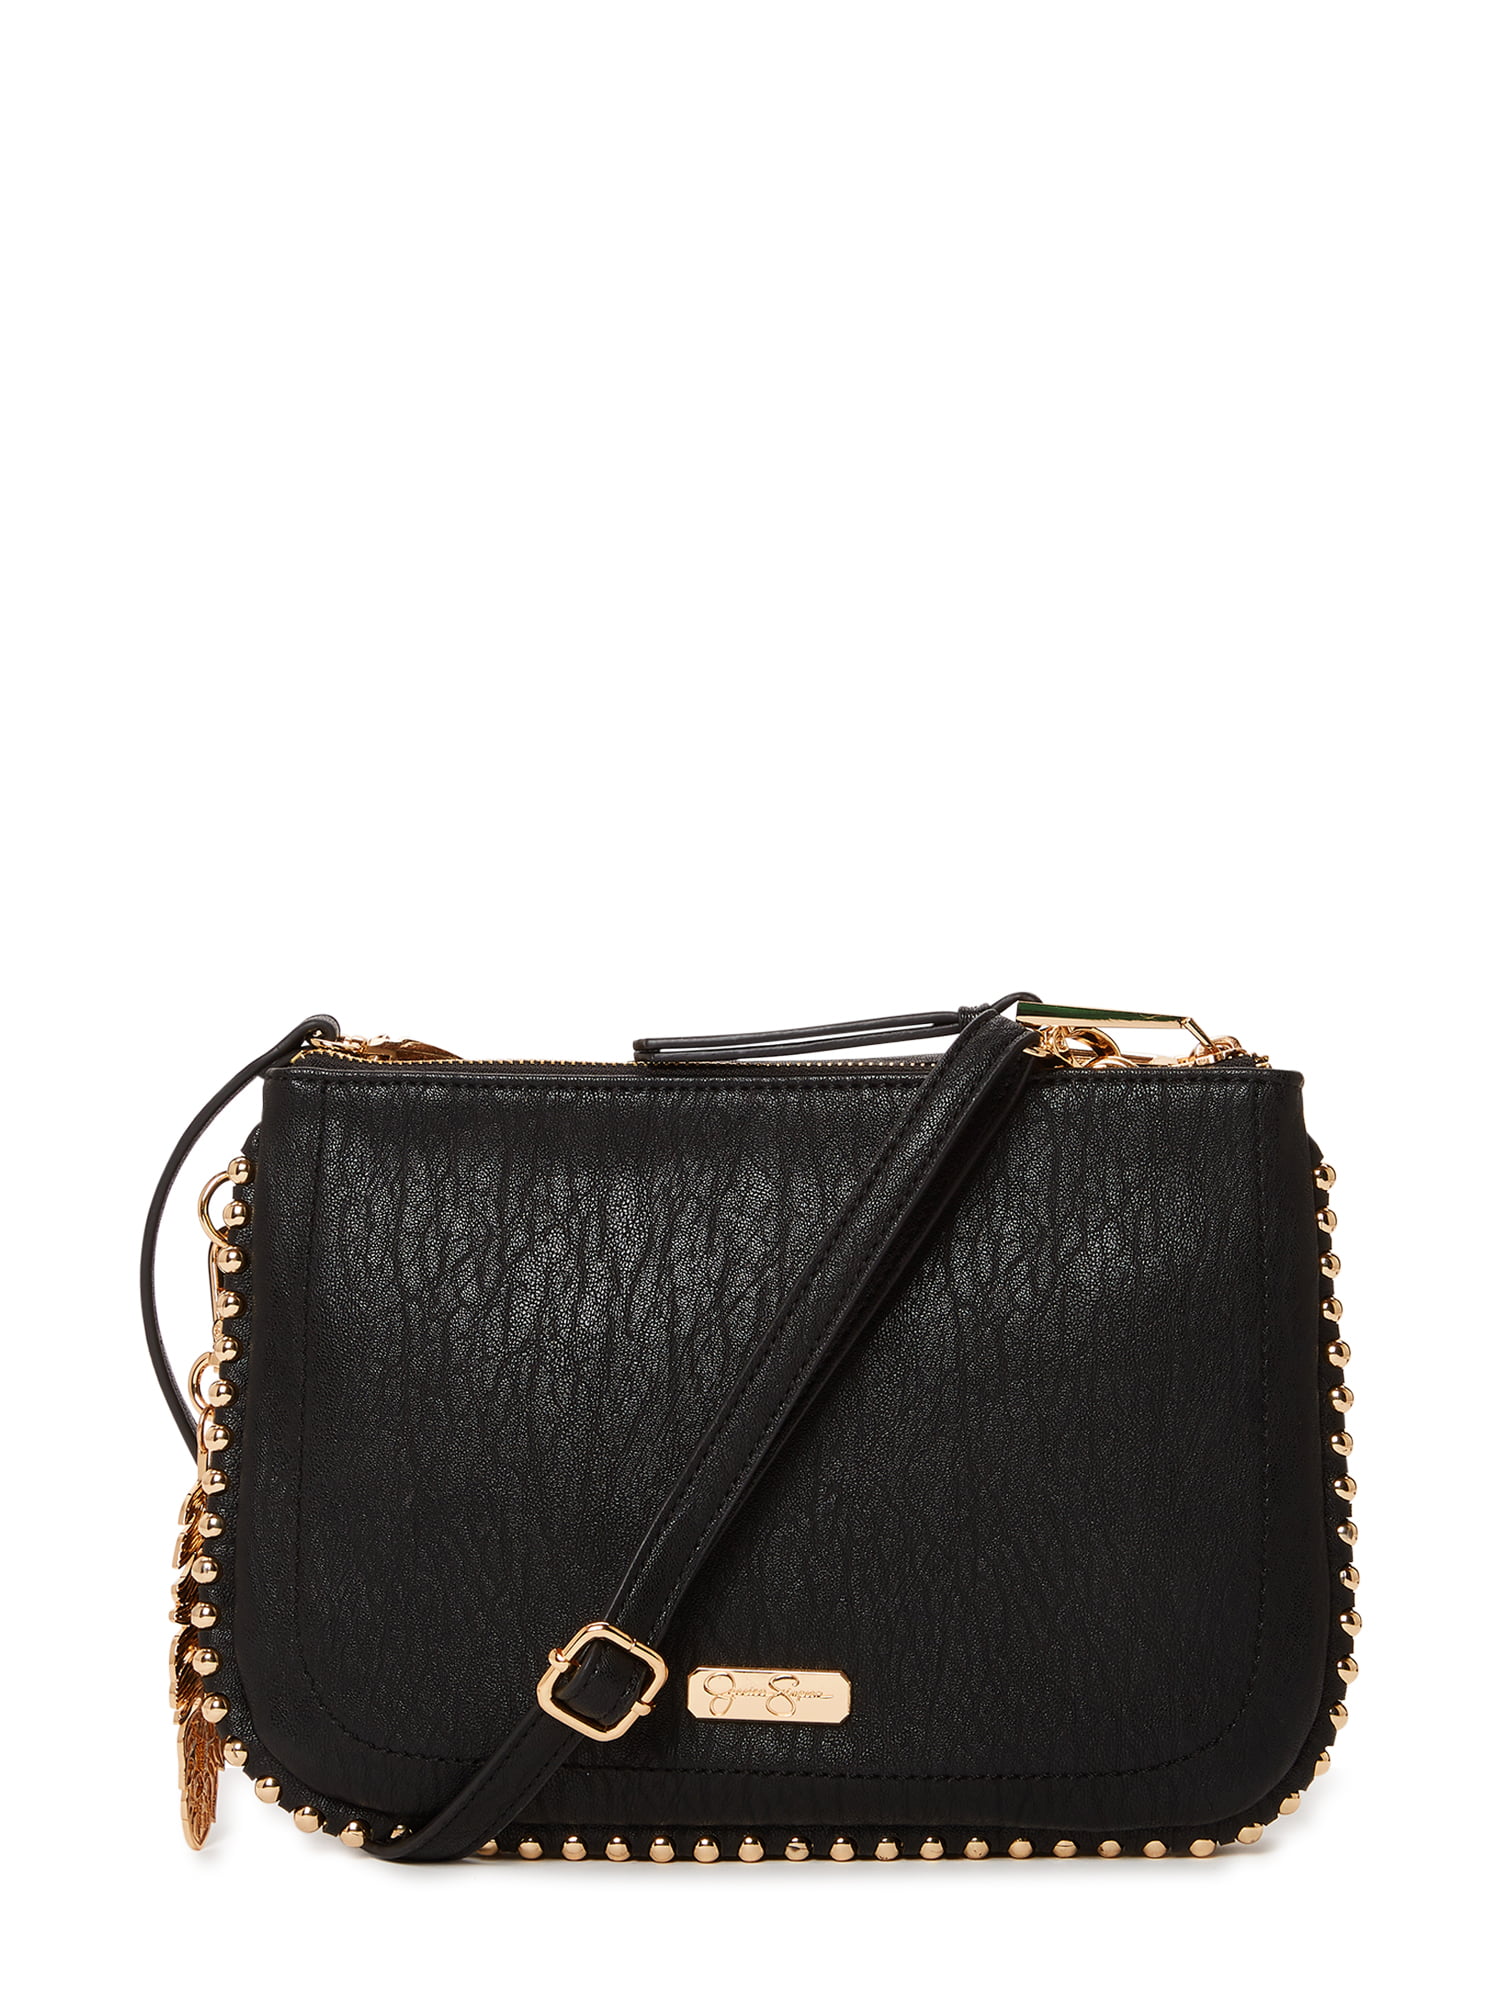 Jessica Simpson Women's Adult Camille Crossbody Handbag Black 